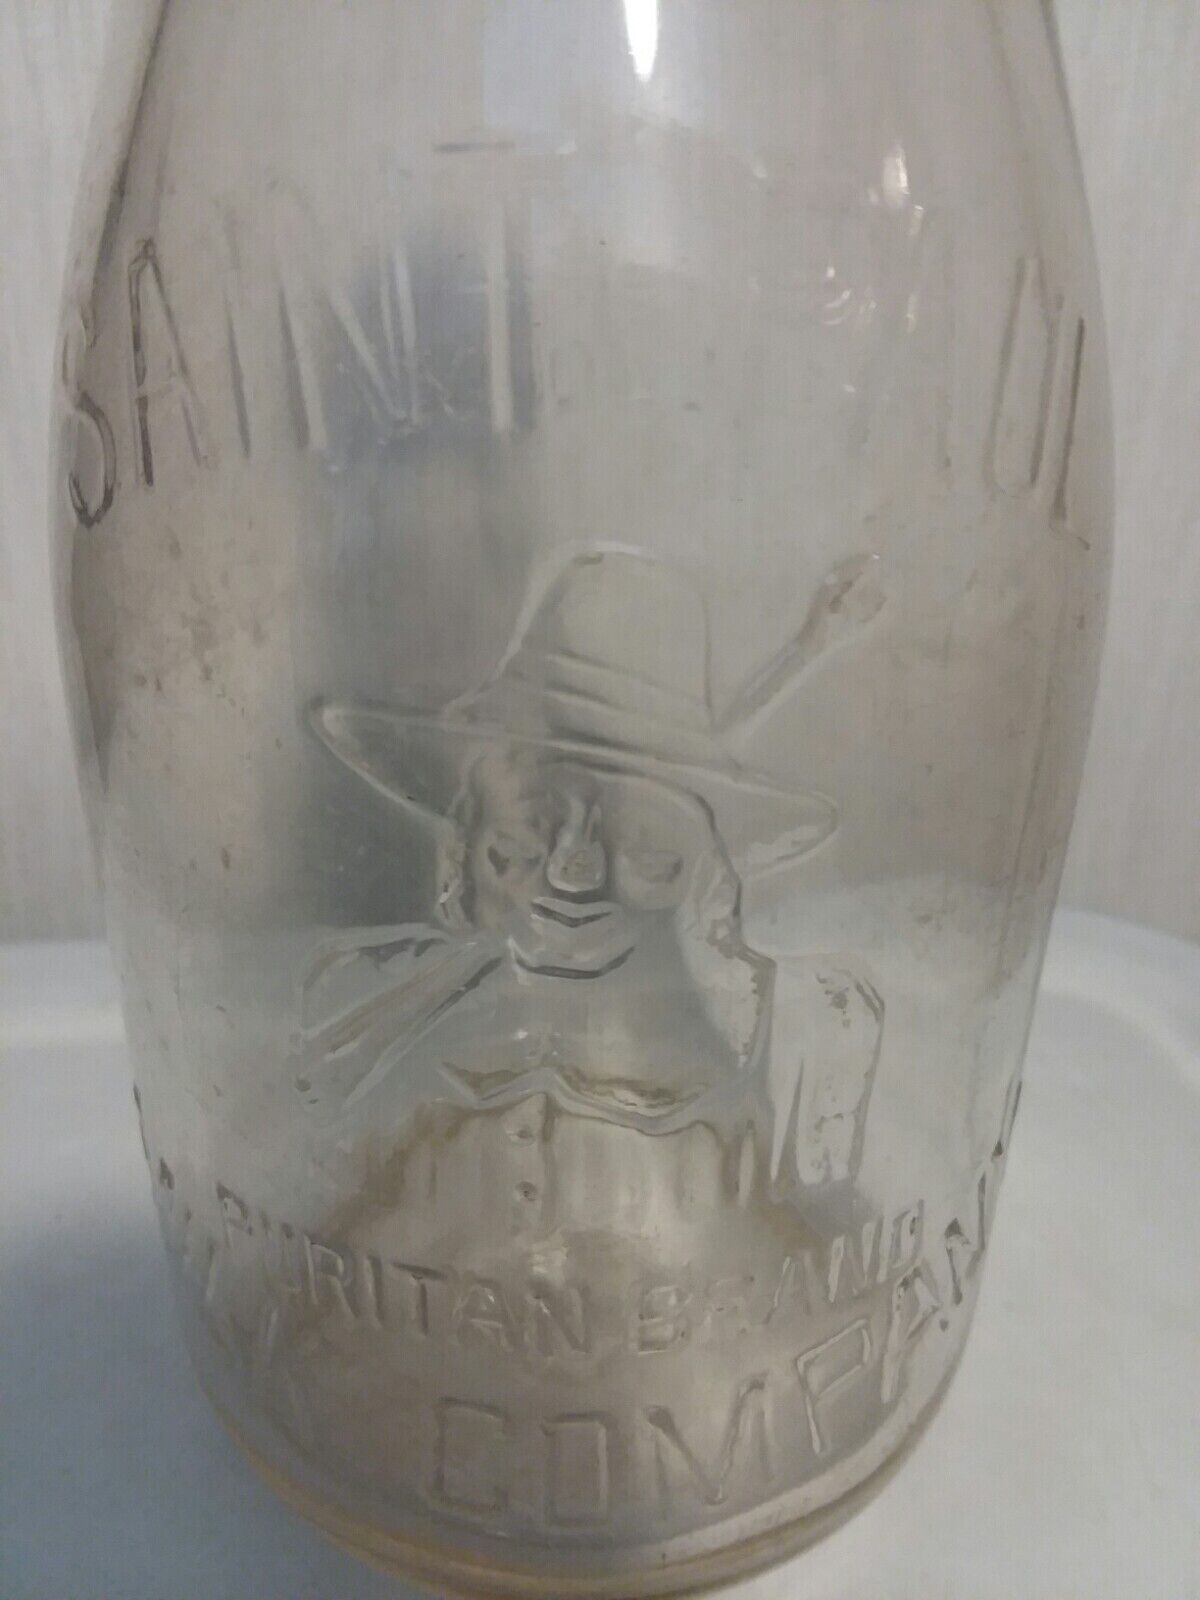 Rare Puritan Brand Saint Paul Milk Company 1 quart bottle